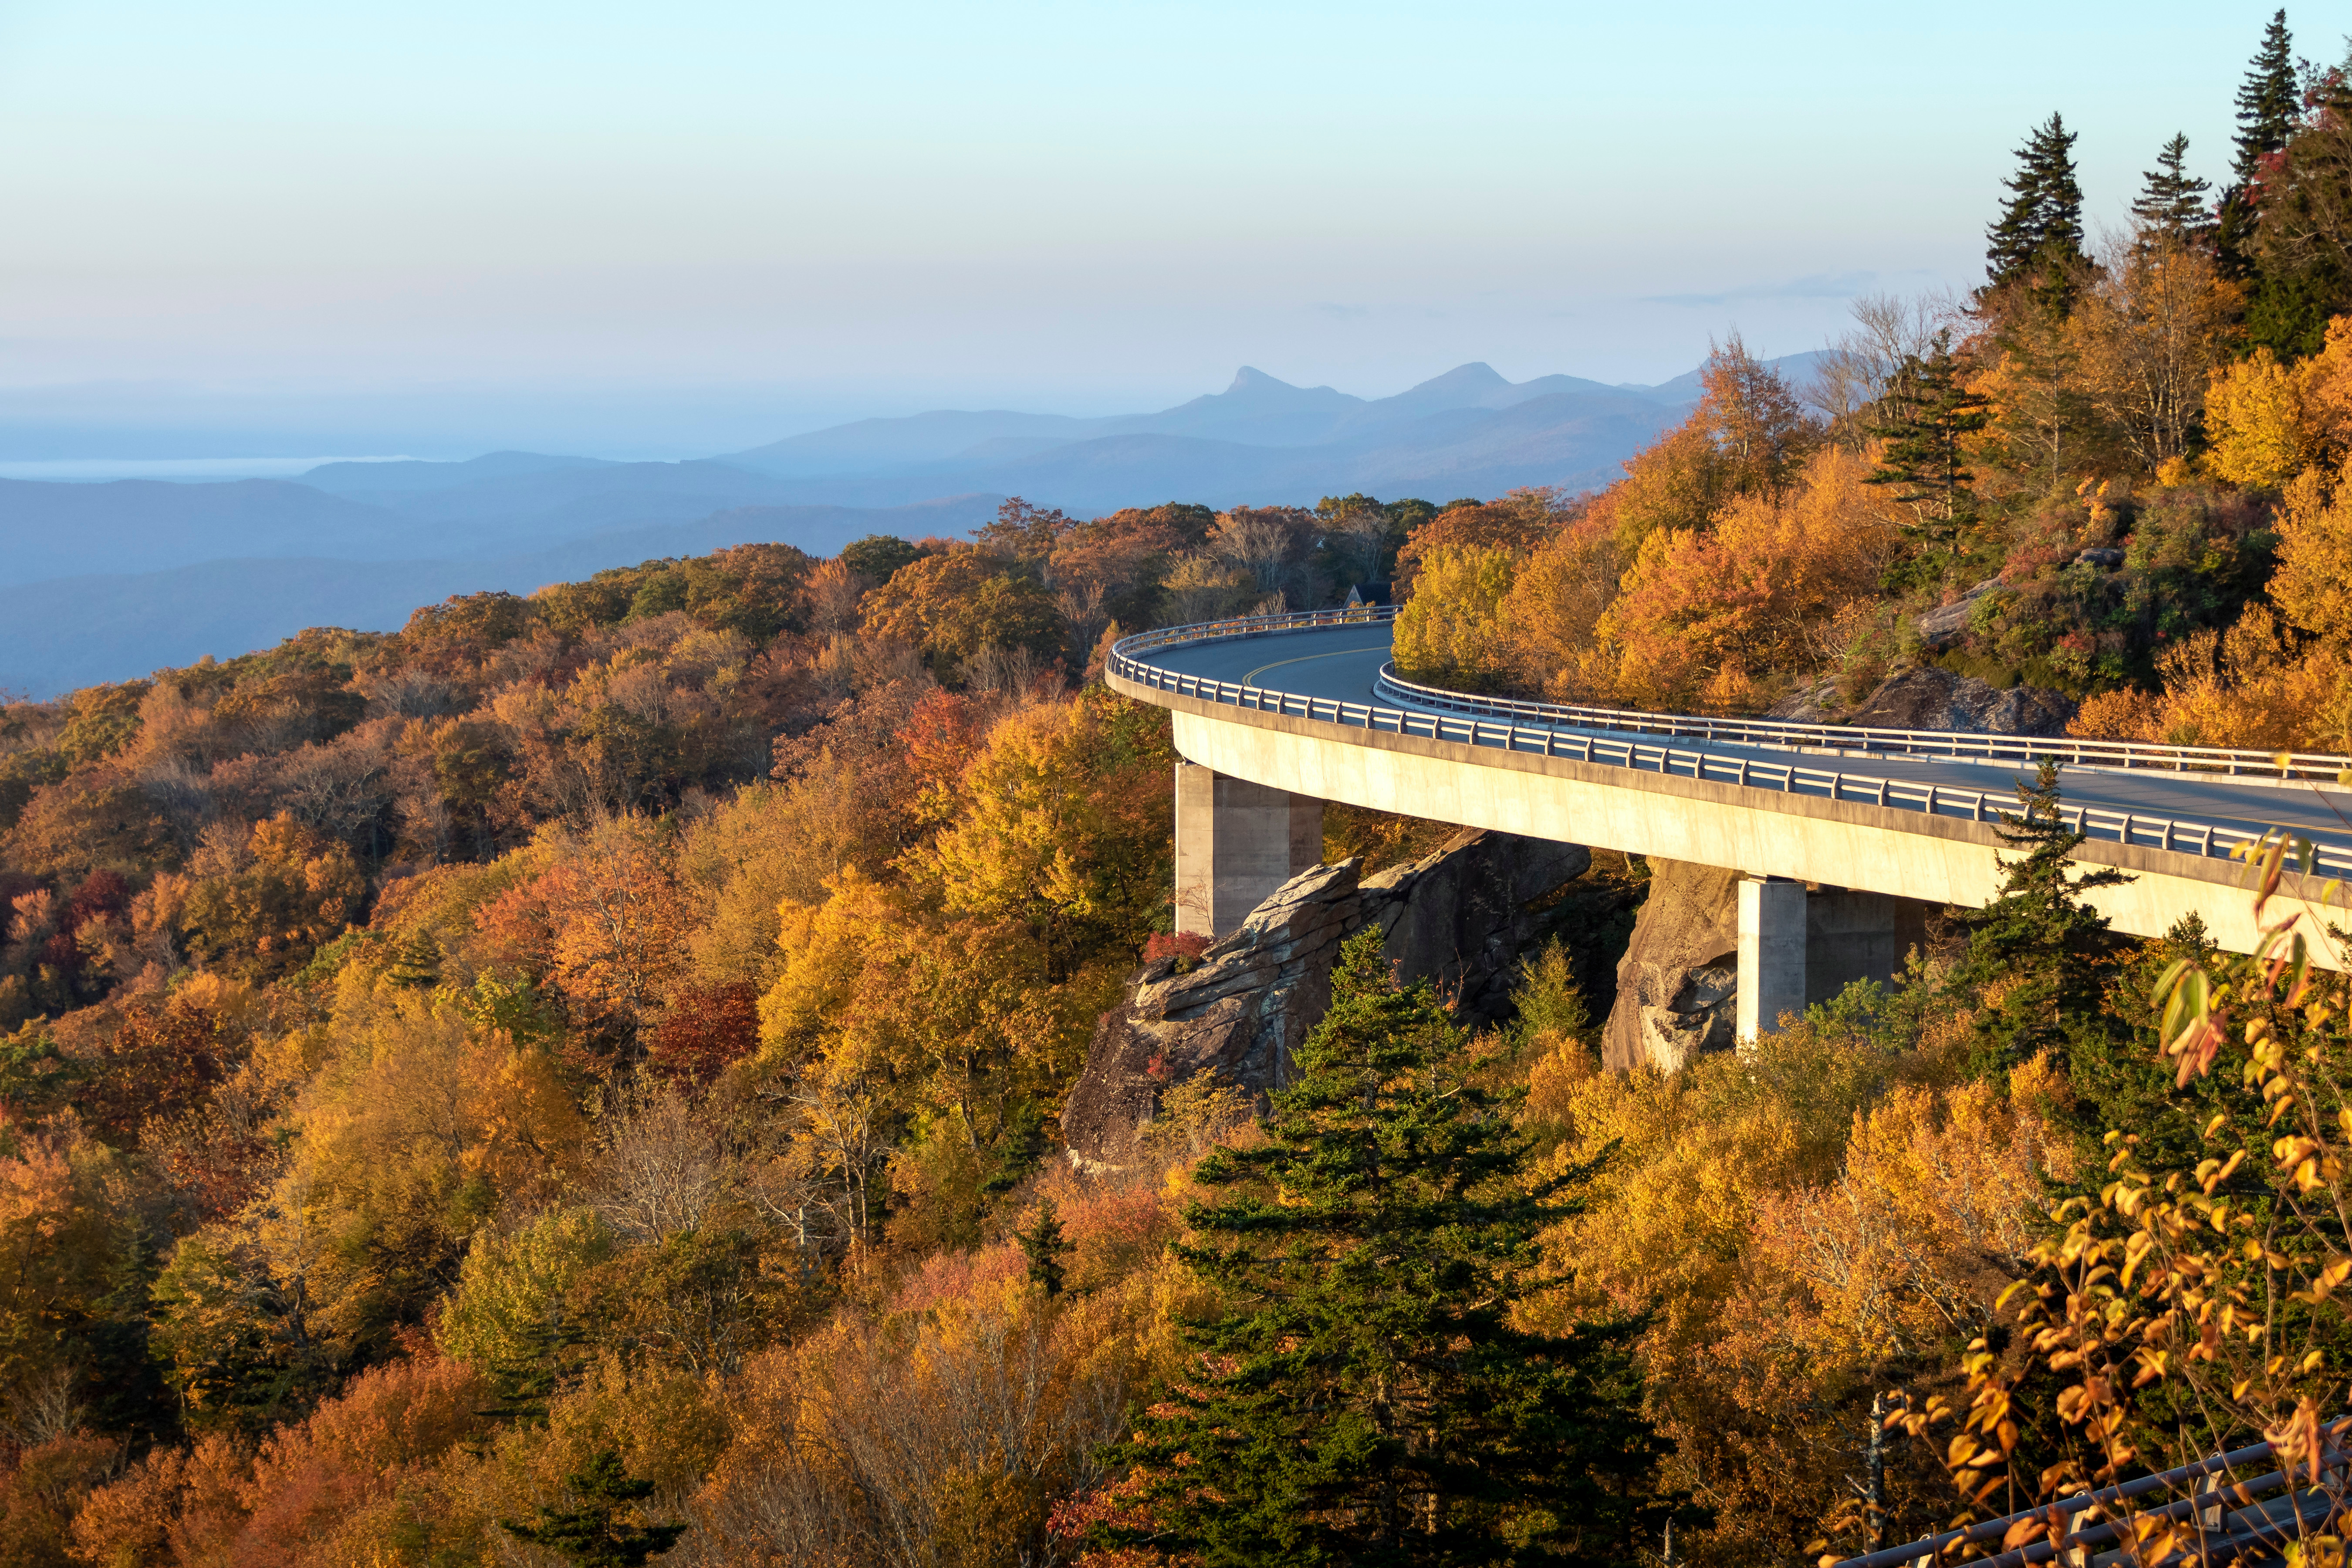 Blue Ridge Parkway: A Scenic Drive through Appalachia